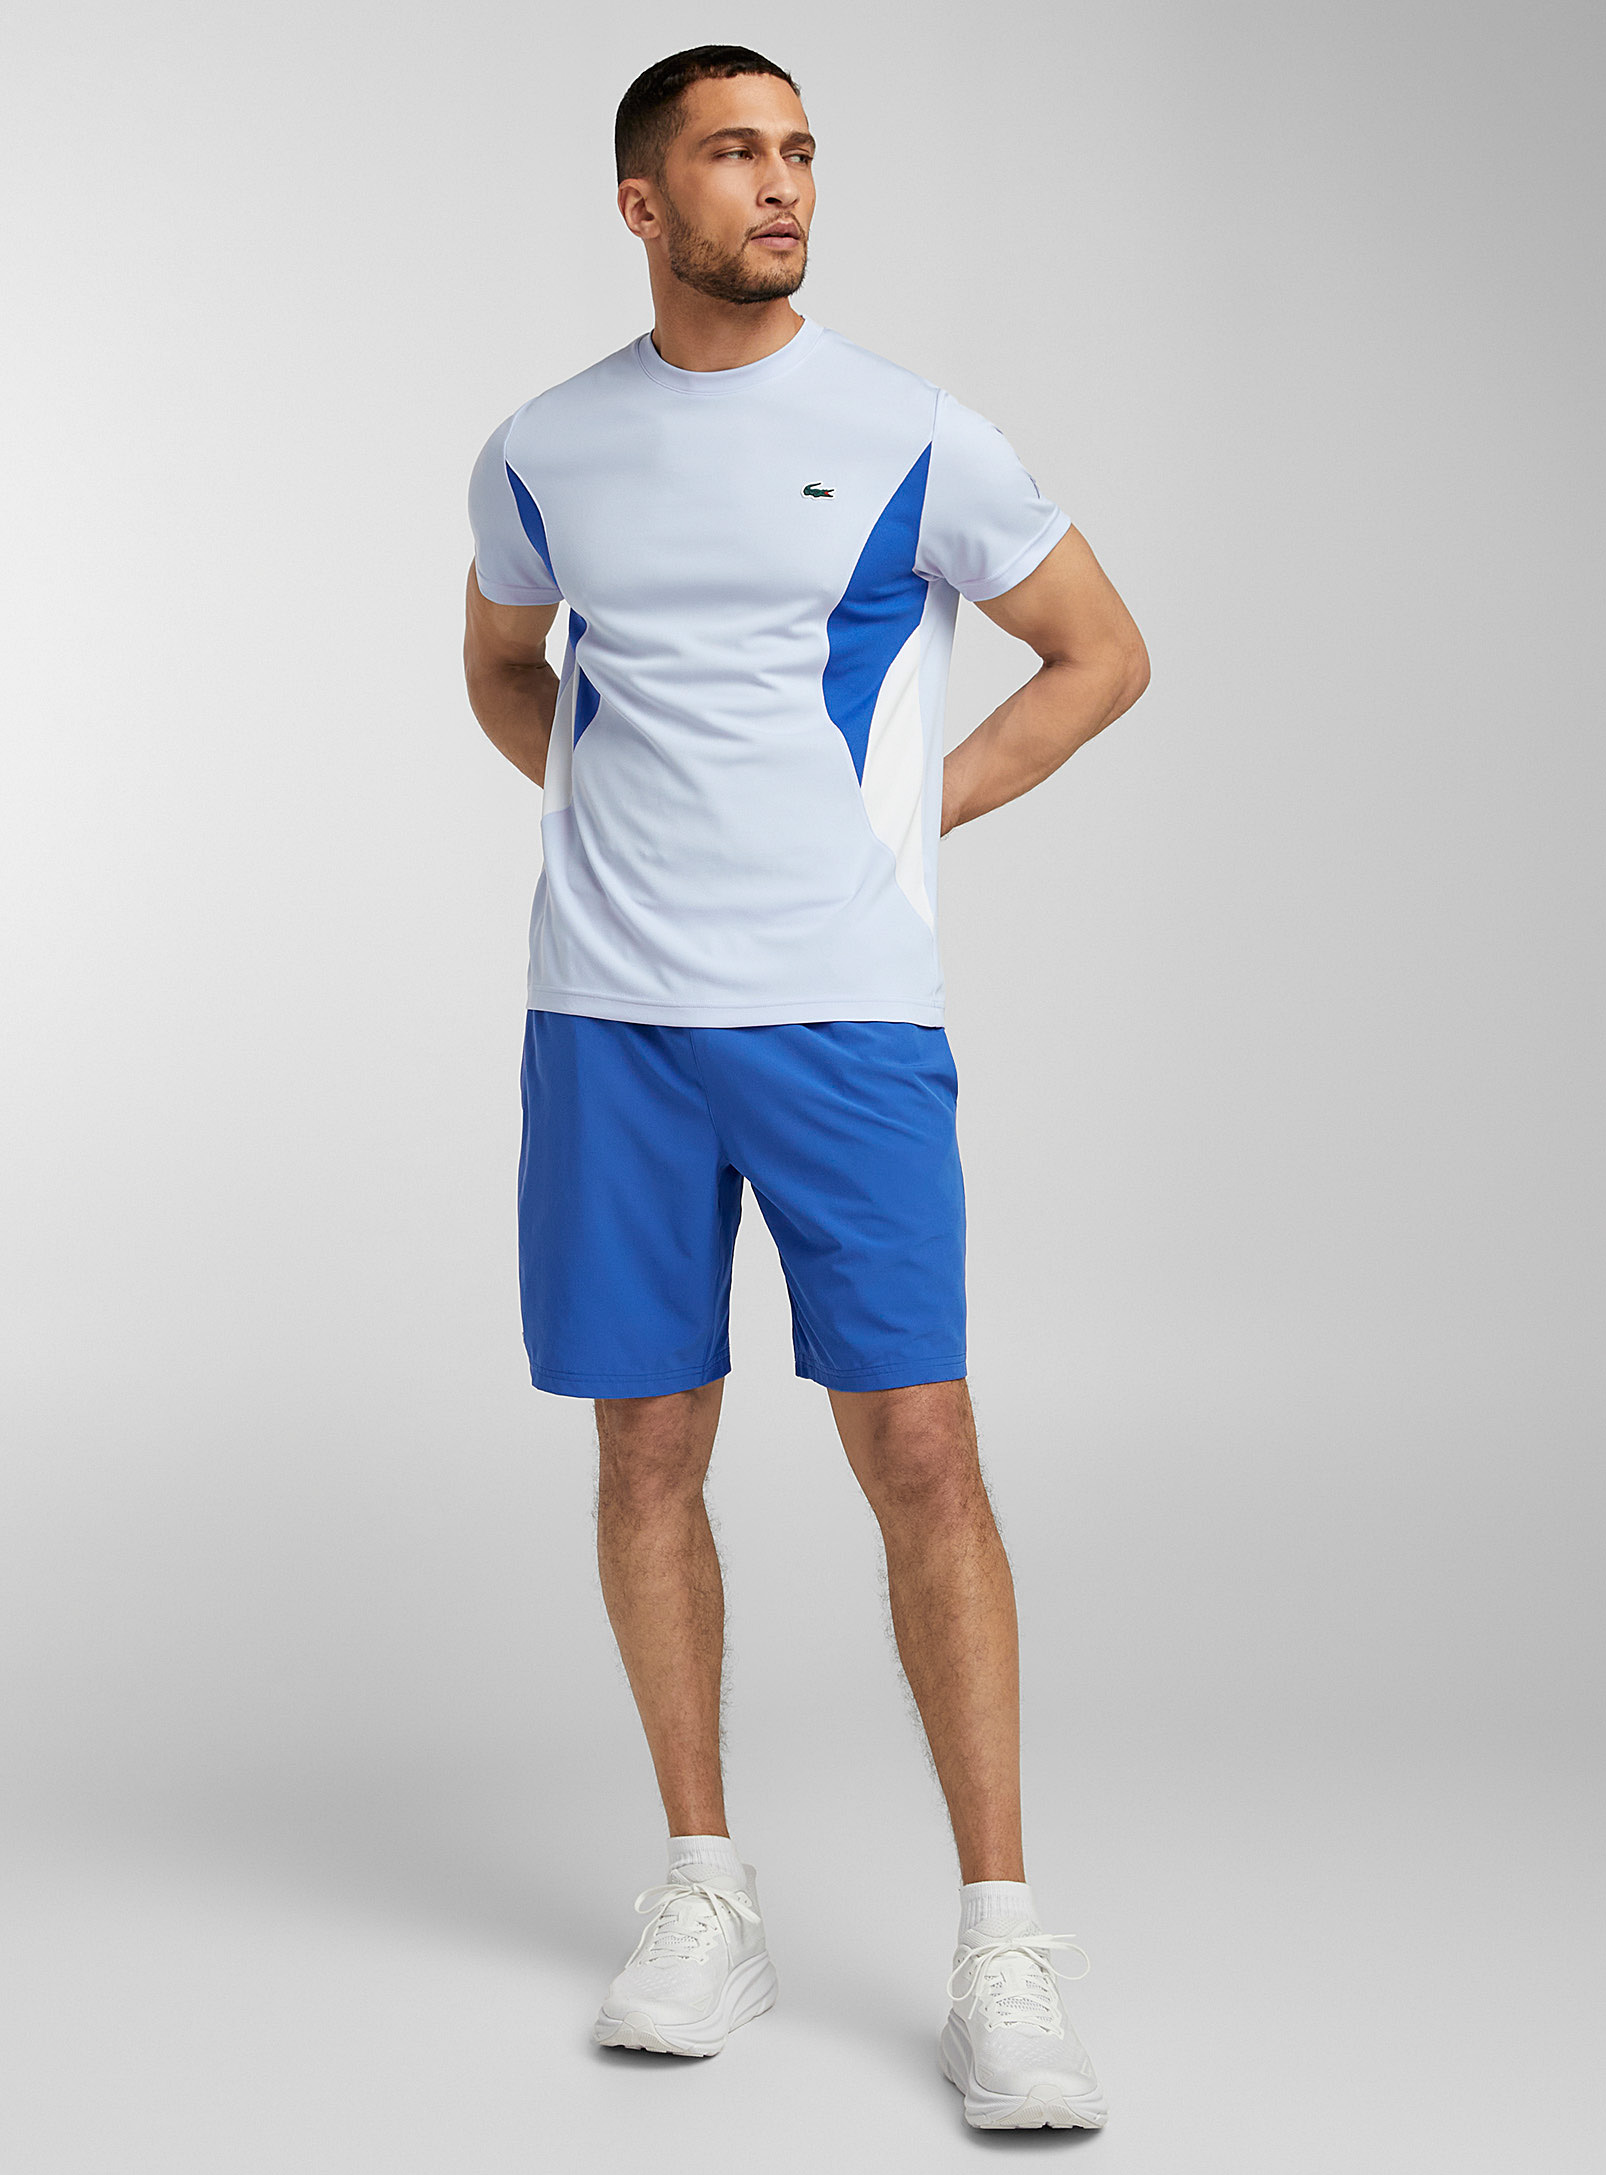 Lacoste - Men's Novak Djokovic cropped blue short